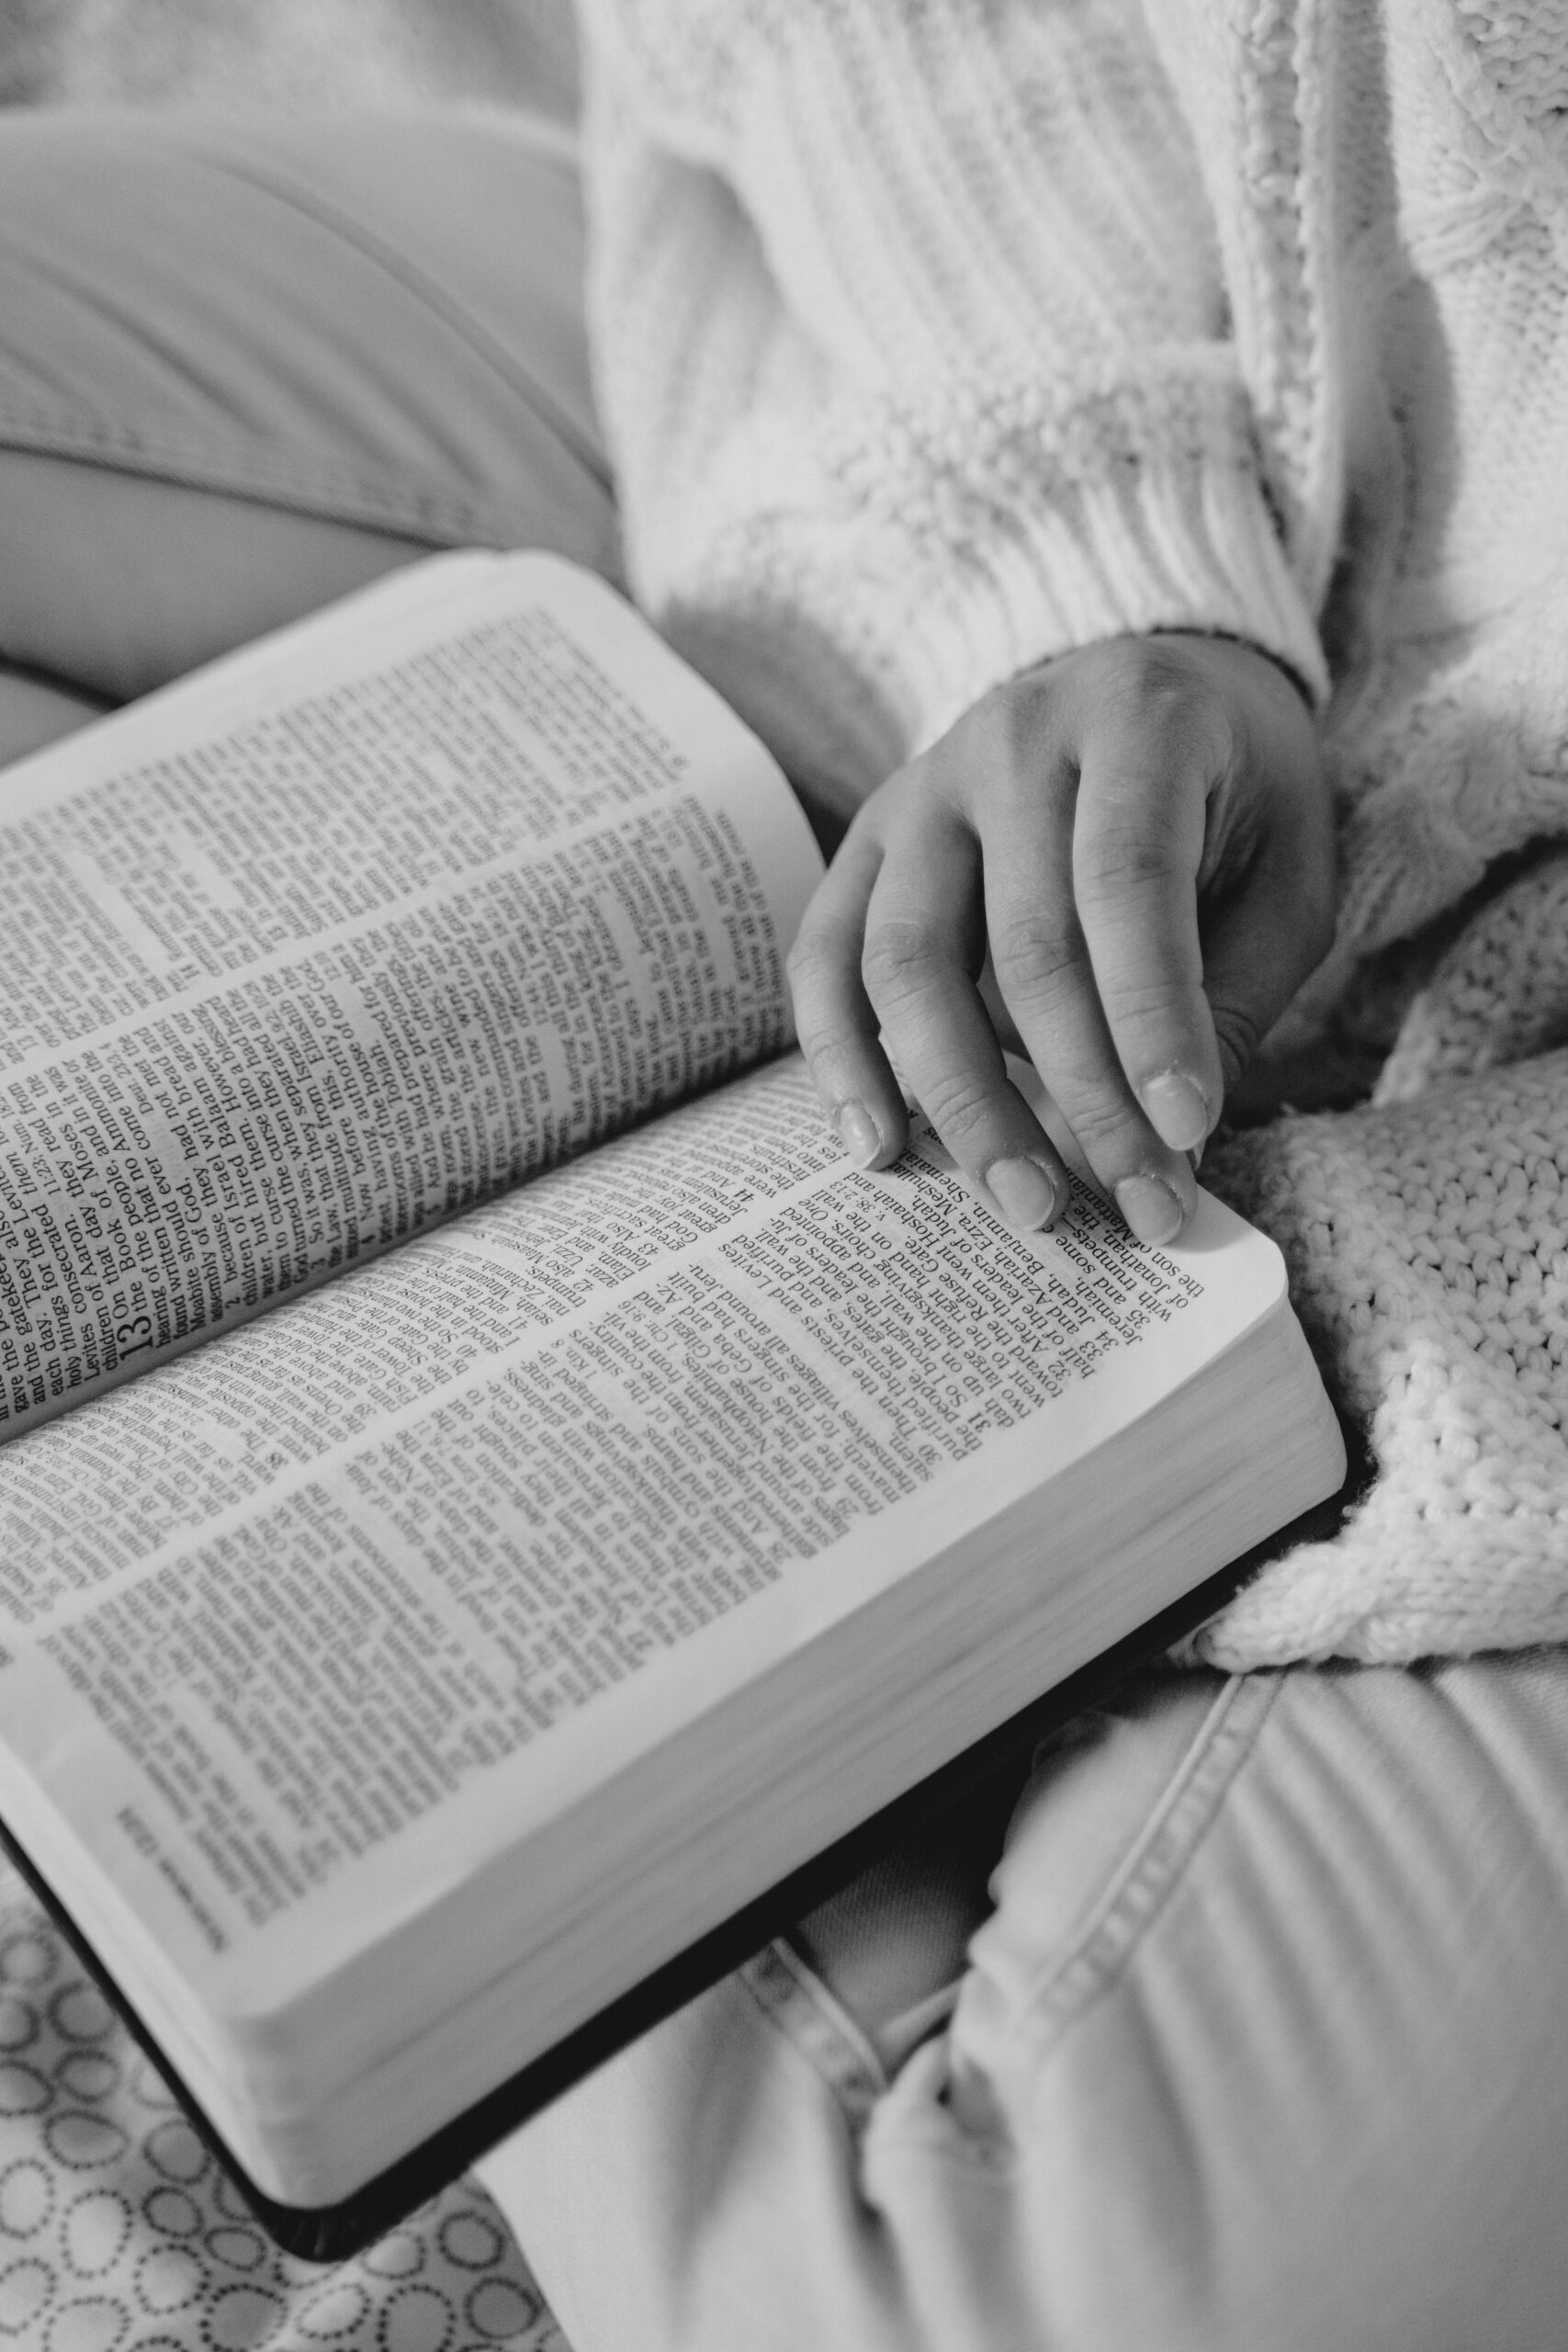 Bible, study, read